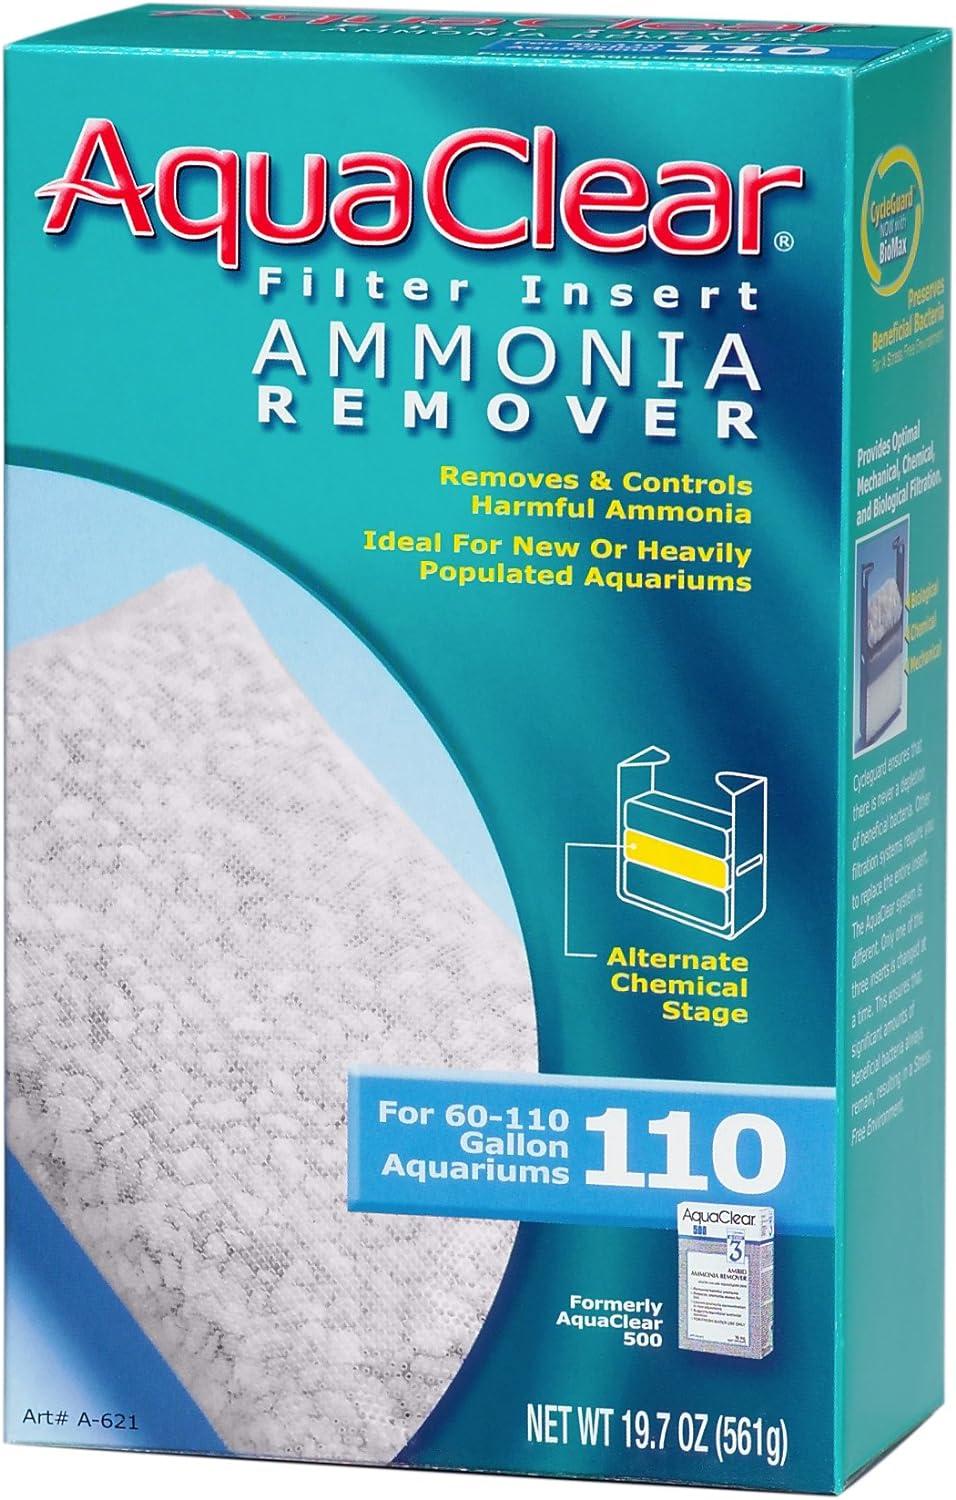 Aquaclear Ammonia Remover Filter Insert (60 - 110 Gallon)